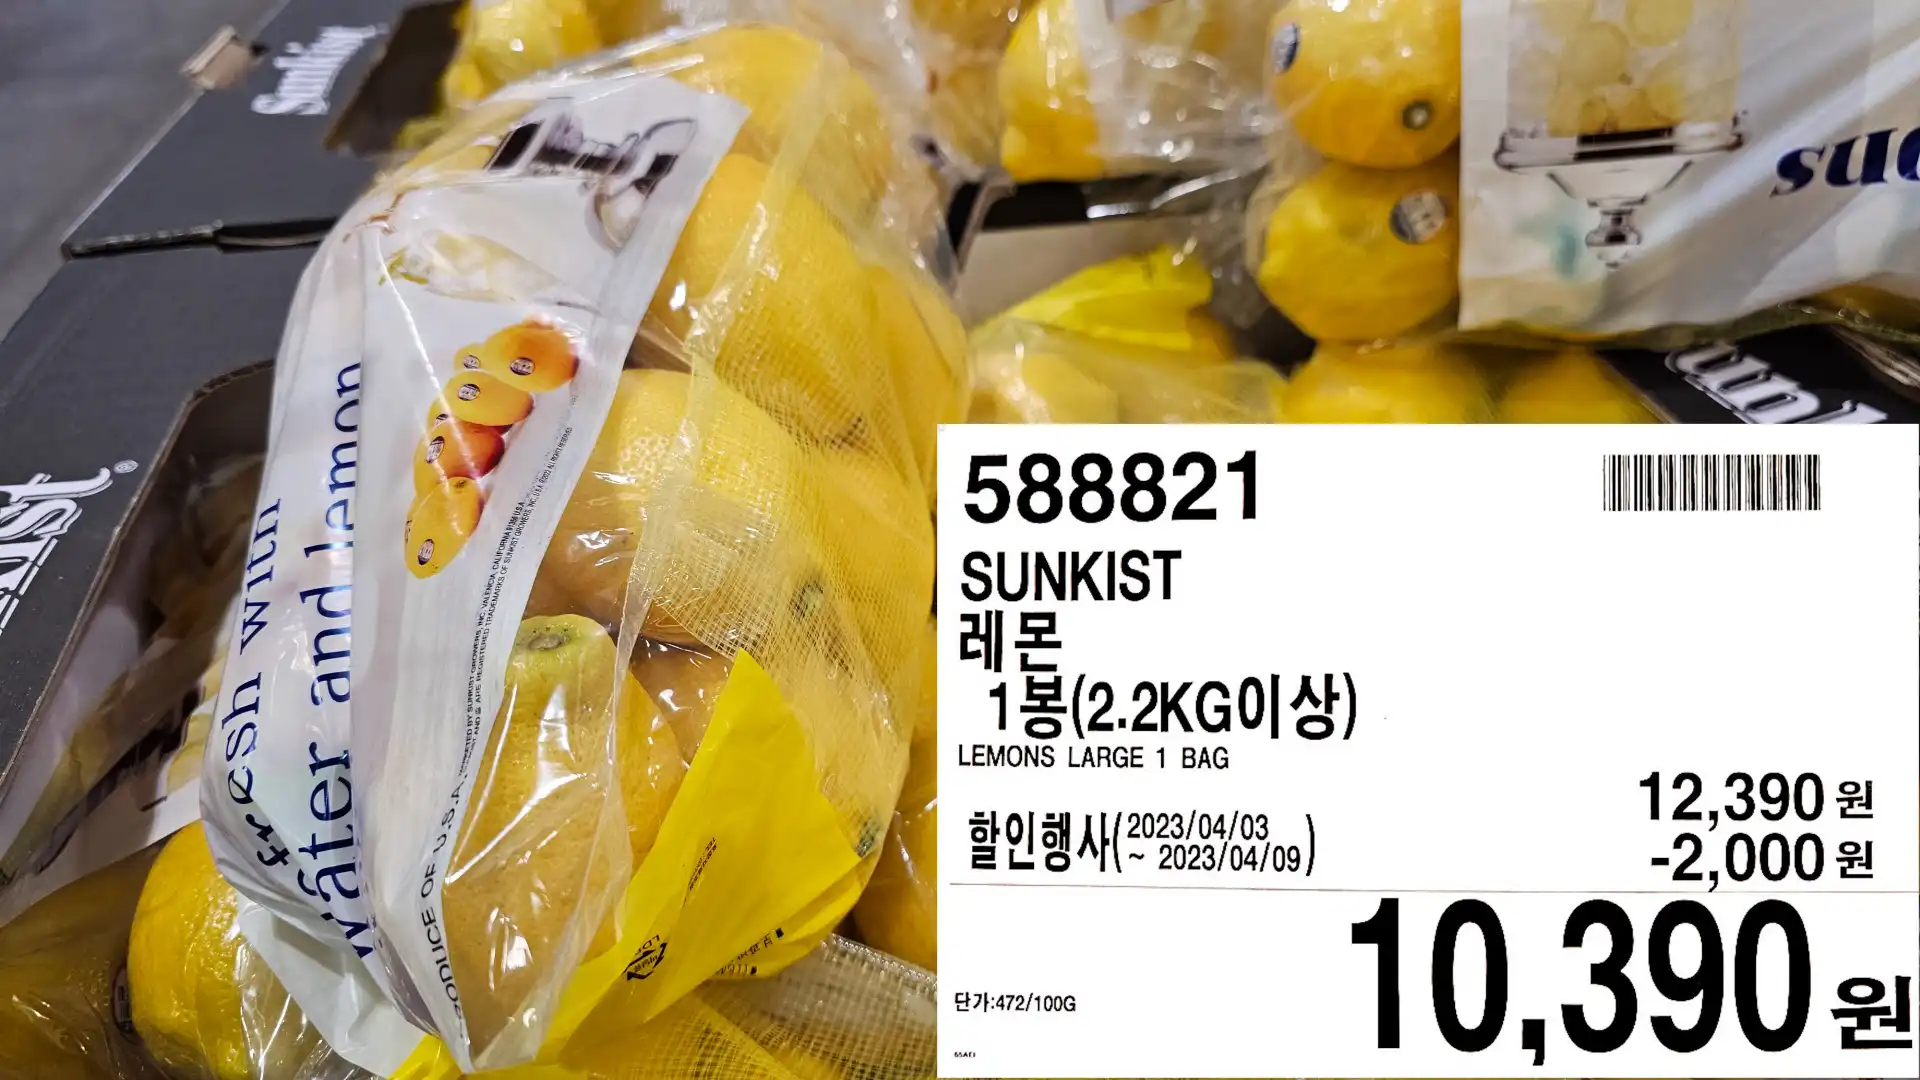 SUNKIST
레몬
1봉(2.2KG이상)
LEMONS LARGE 1 BAG
10&#44;390원